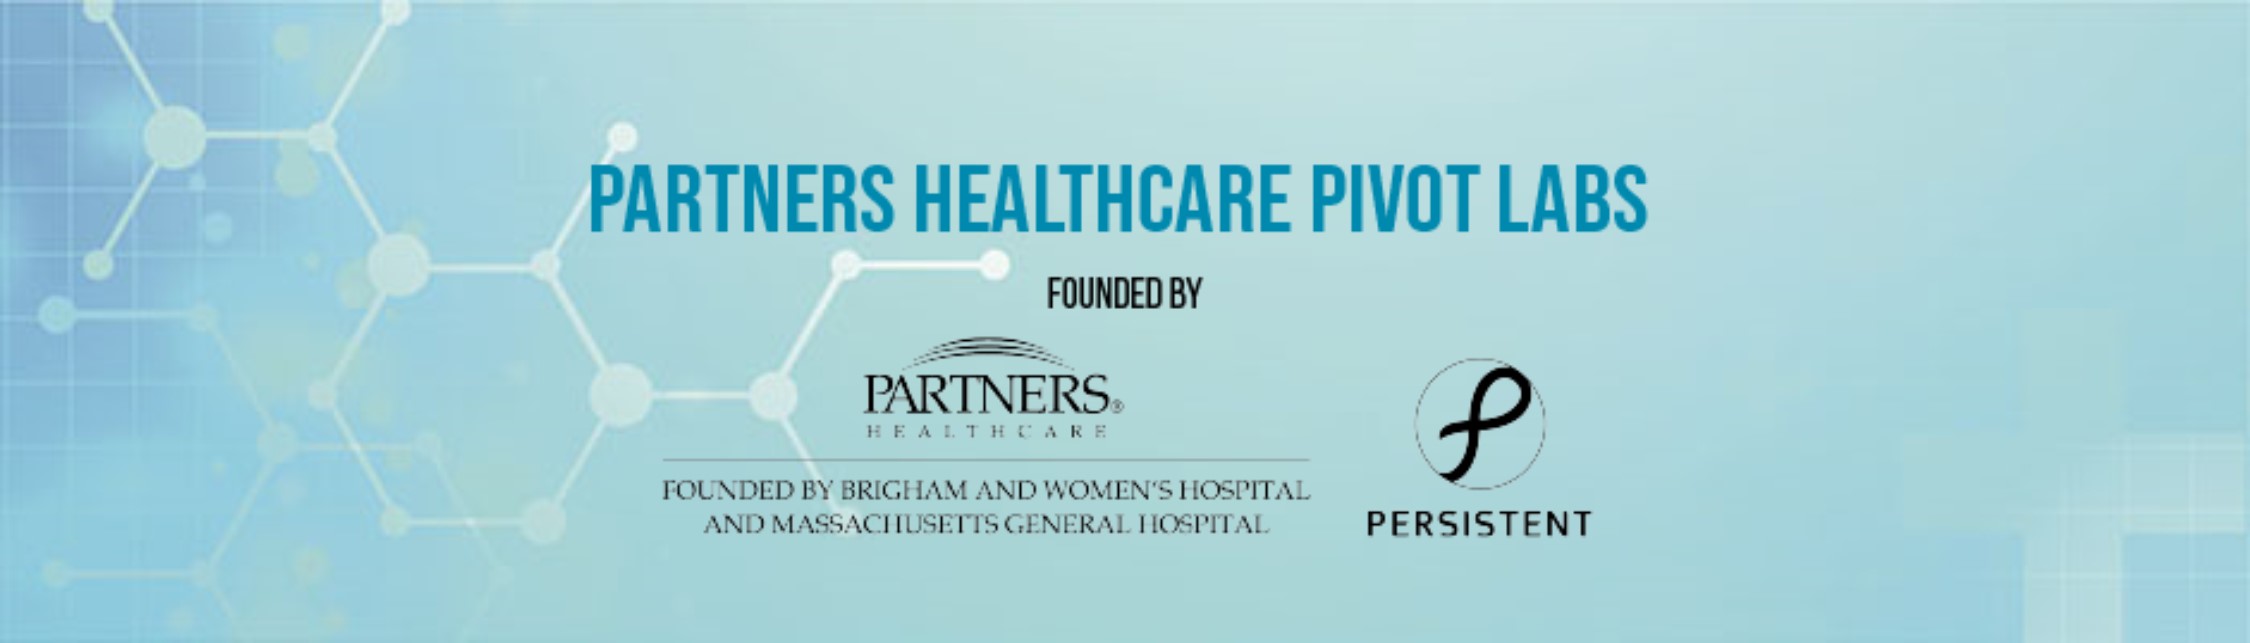 Partners HealthCare Pivot Labs